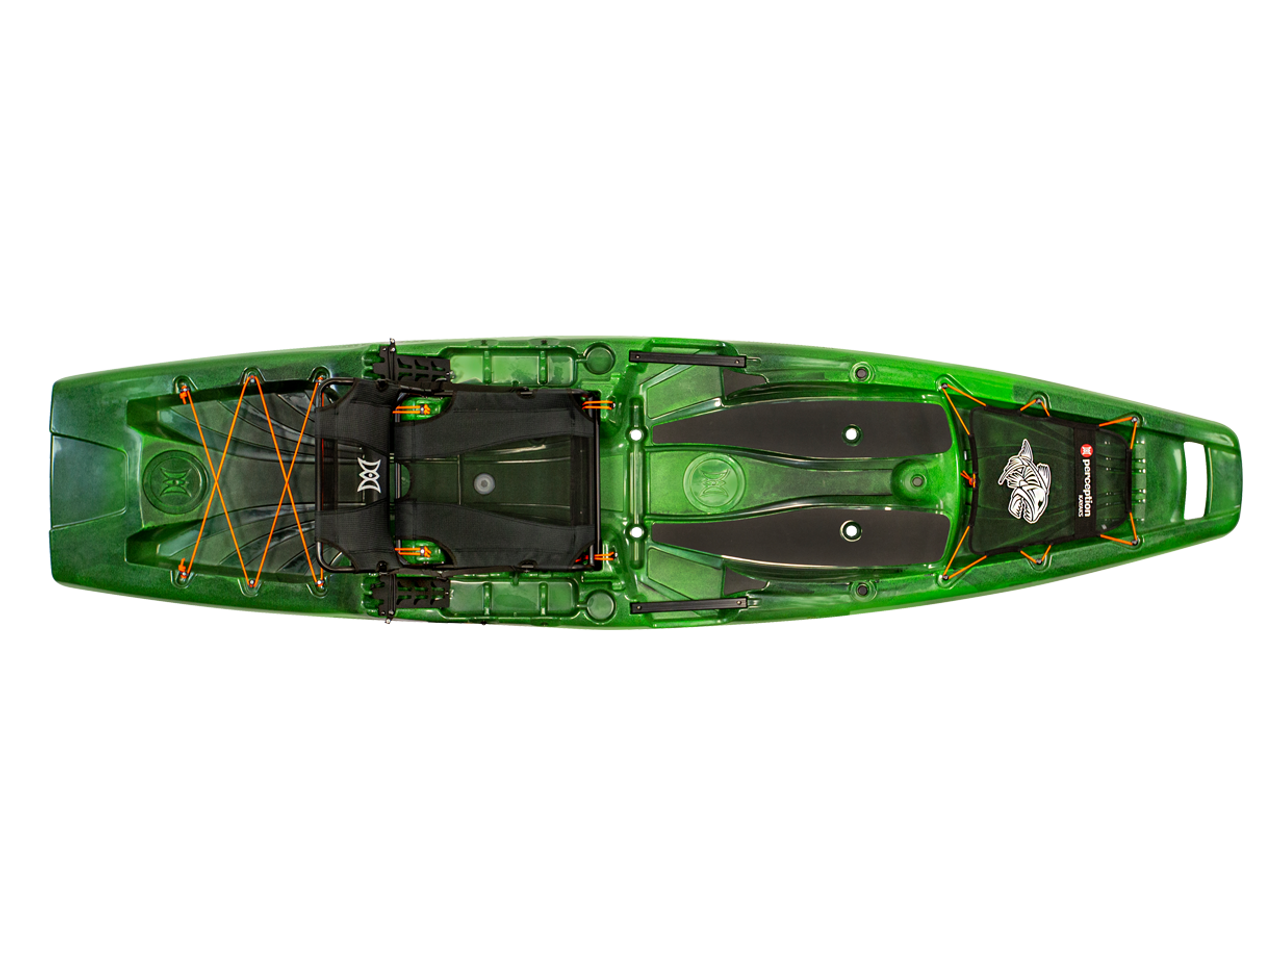 Outlaw 11.5 Fishing kayak from Perception Kayaks - Transducer